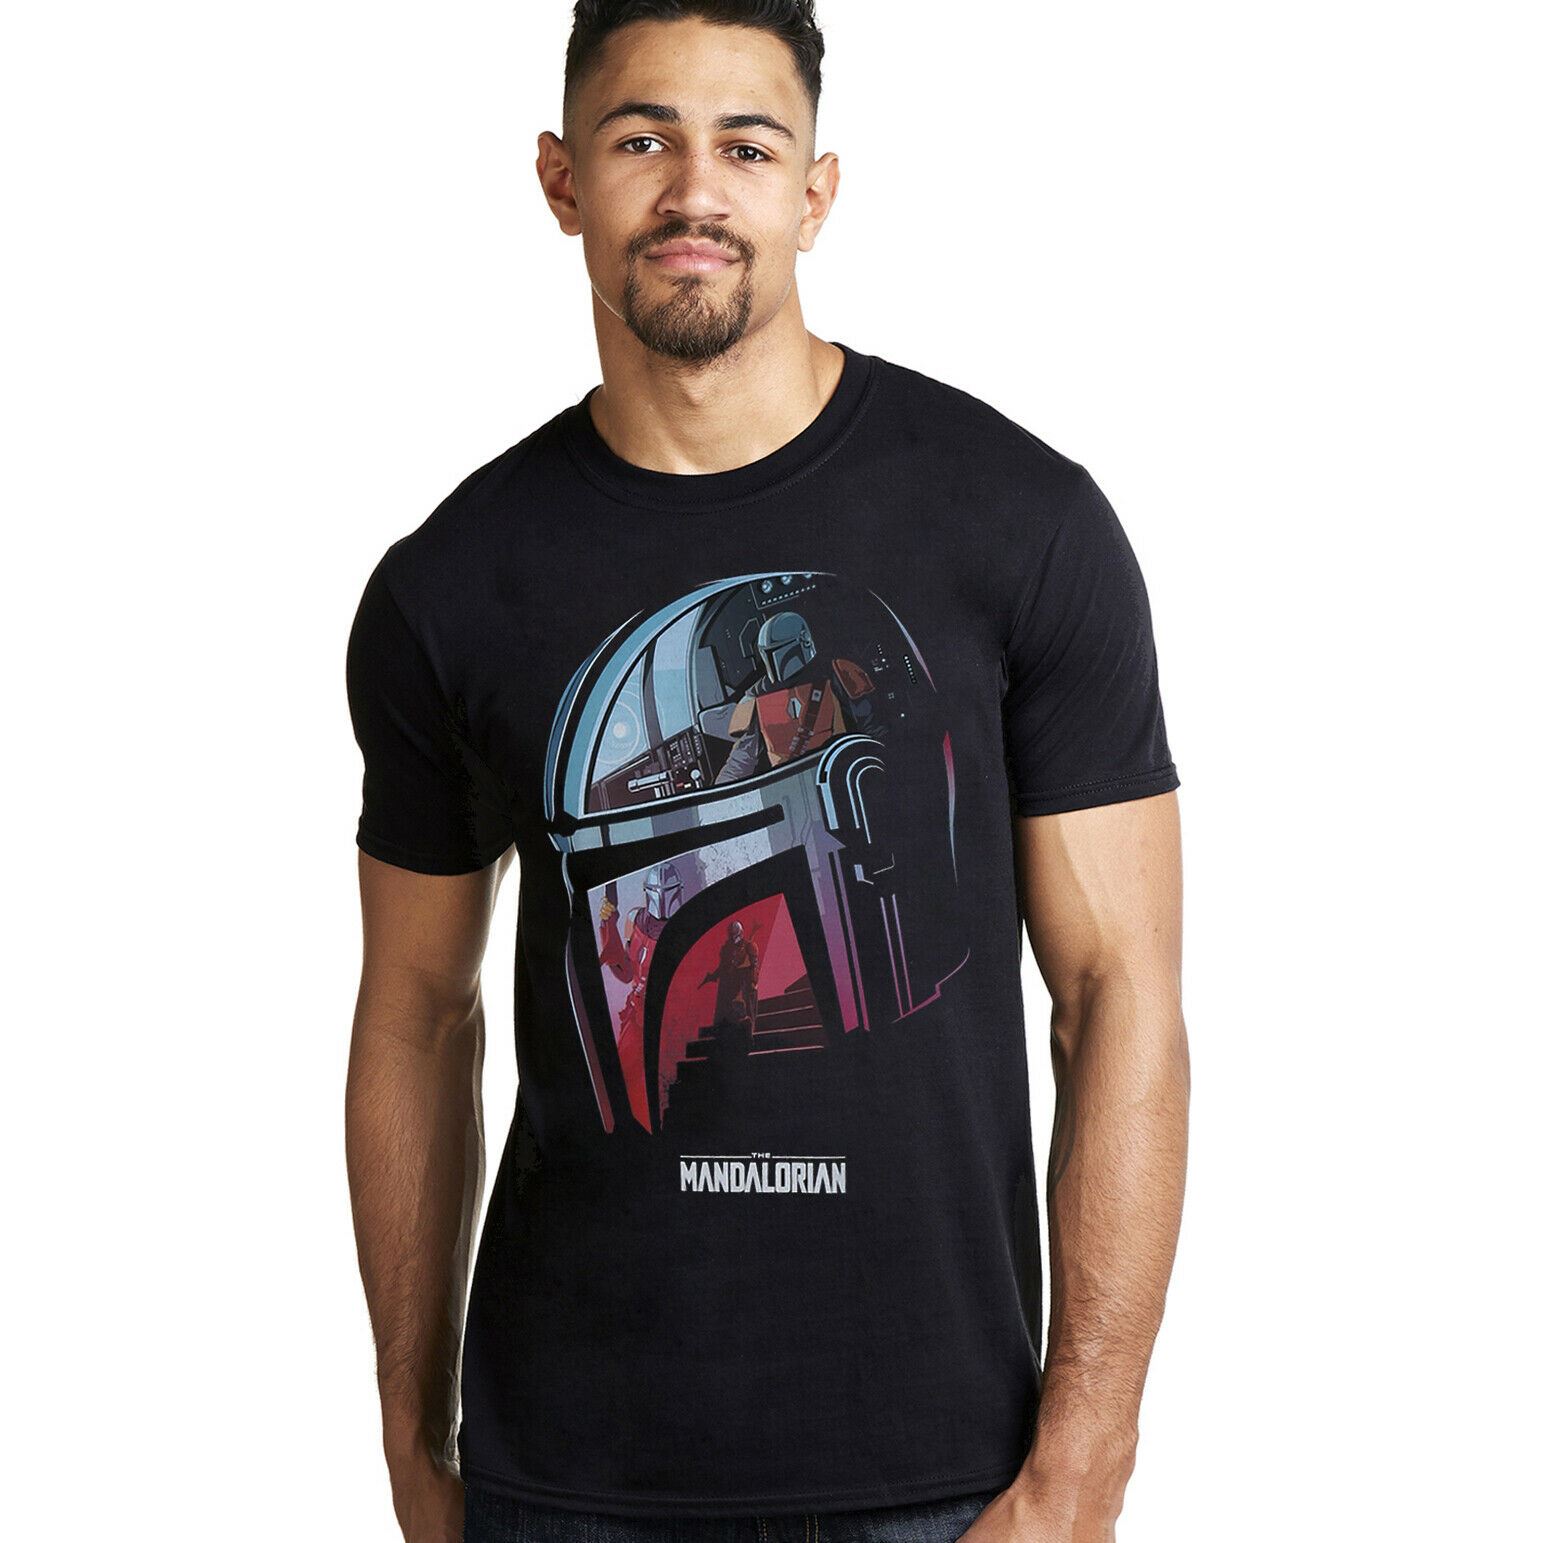 Official Star Wars Mens Mandalorian Helmet T-shirt Black S - XXL | eBay